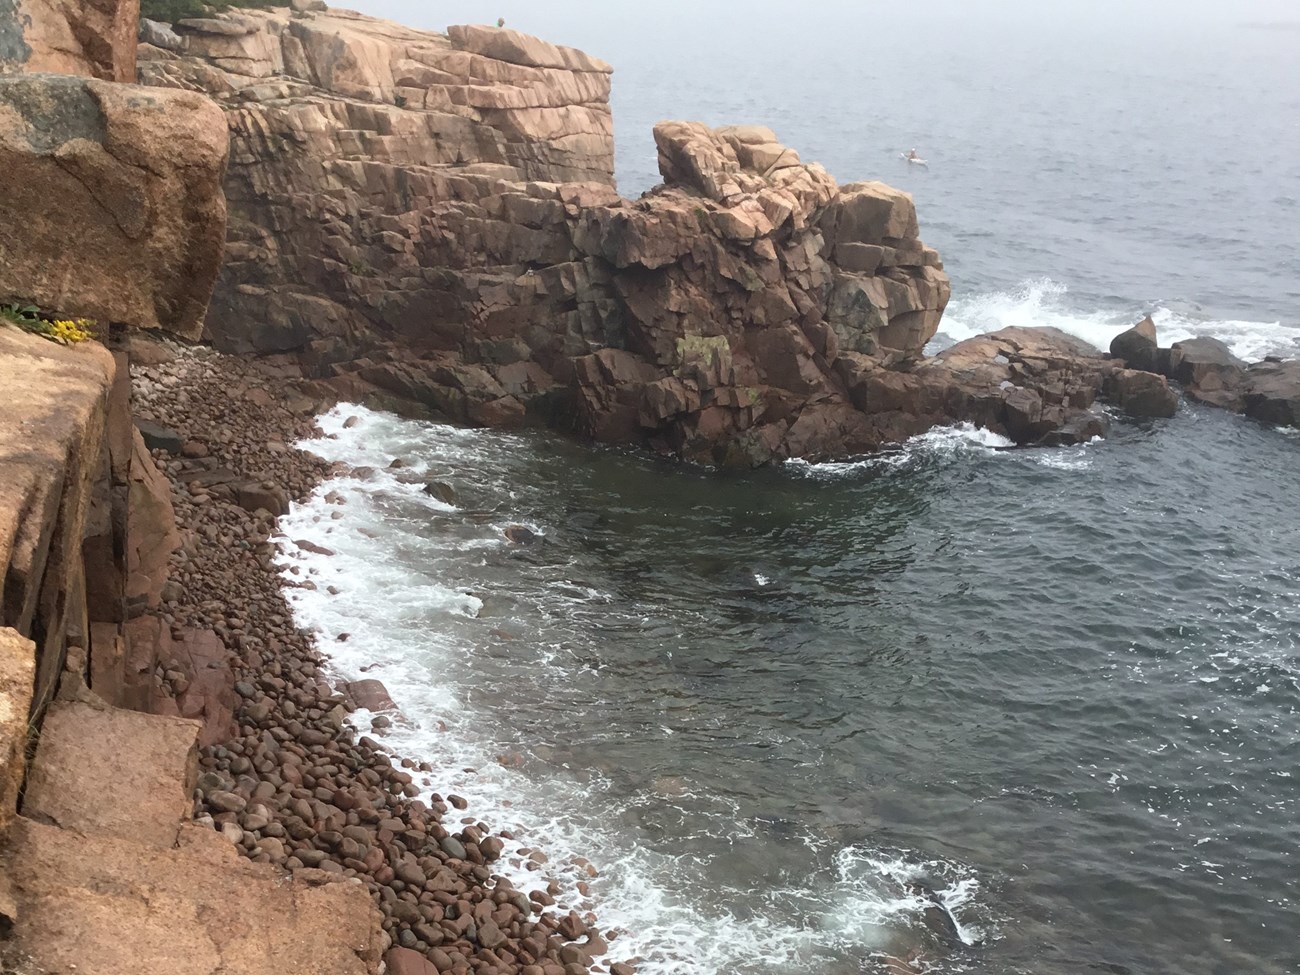 Waves breaking on the boulder covered shoreline